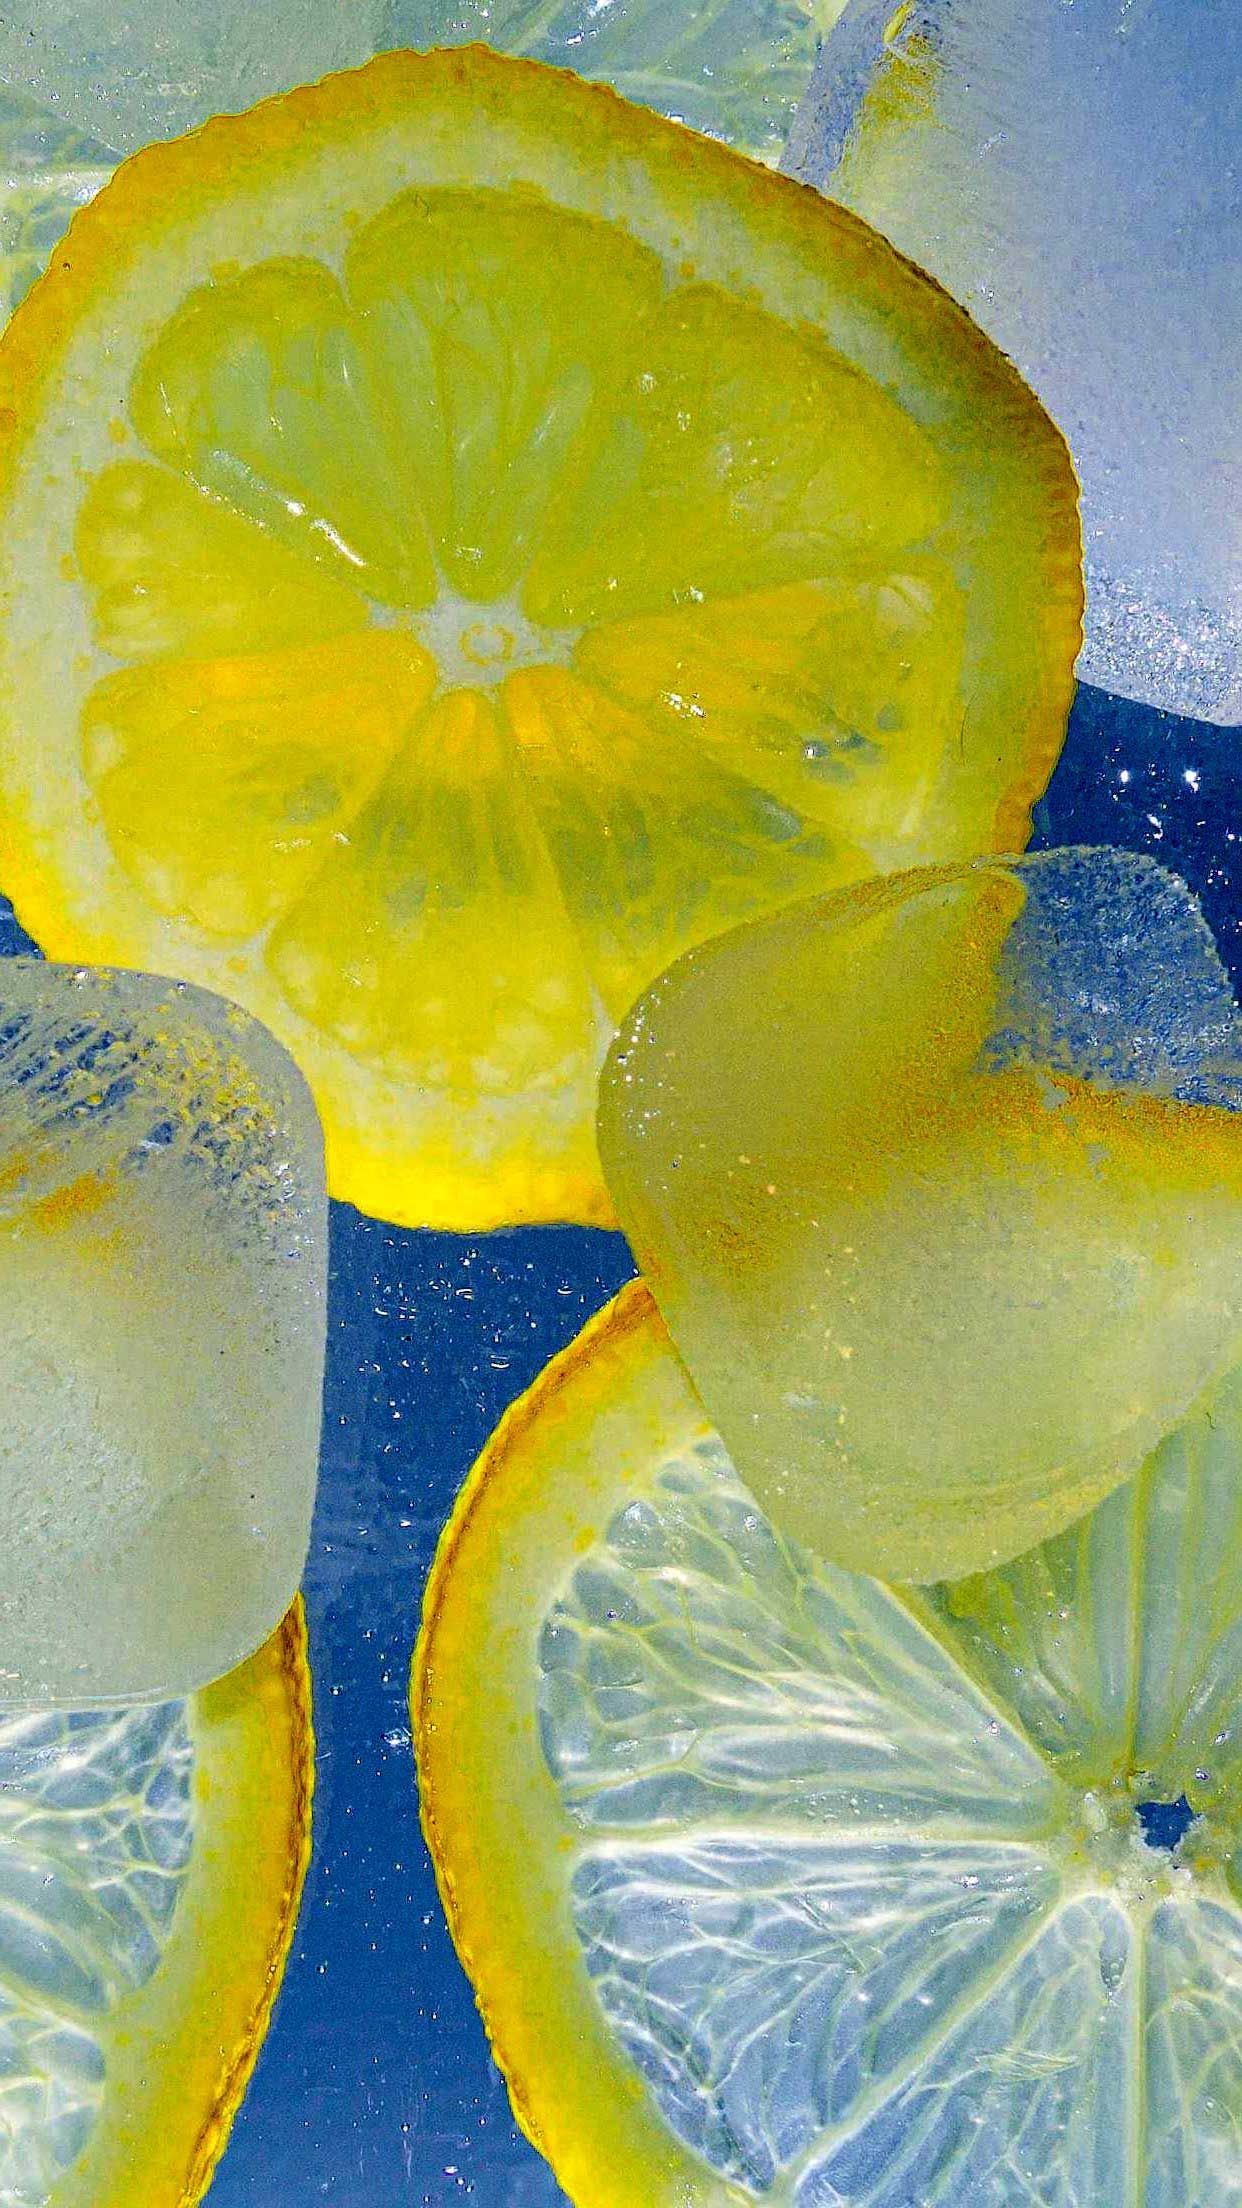 Sliced lemons on a blue background - Lemon